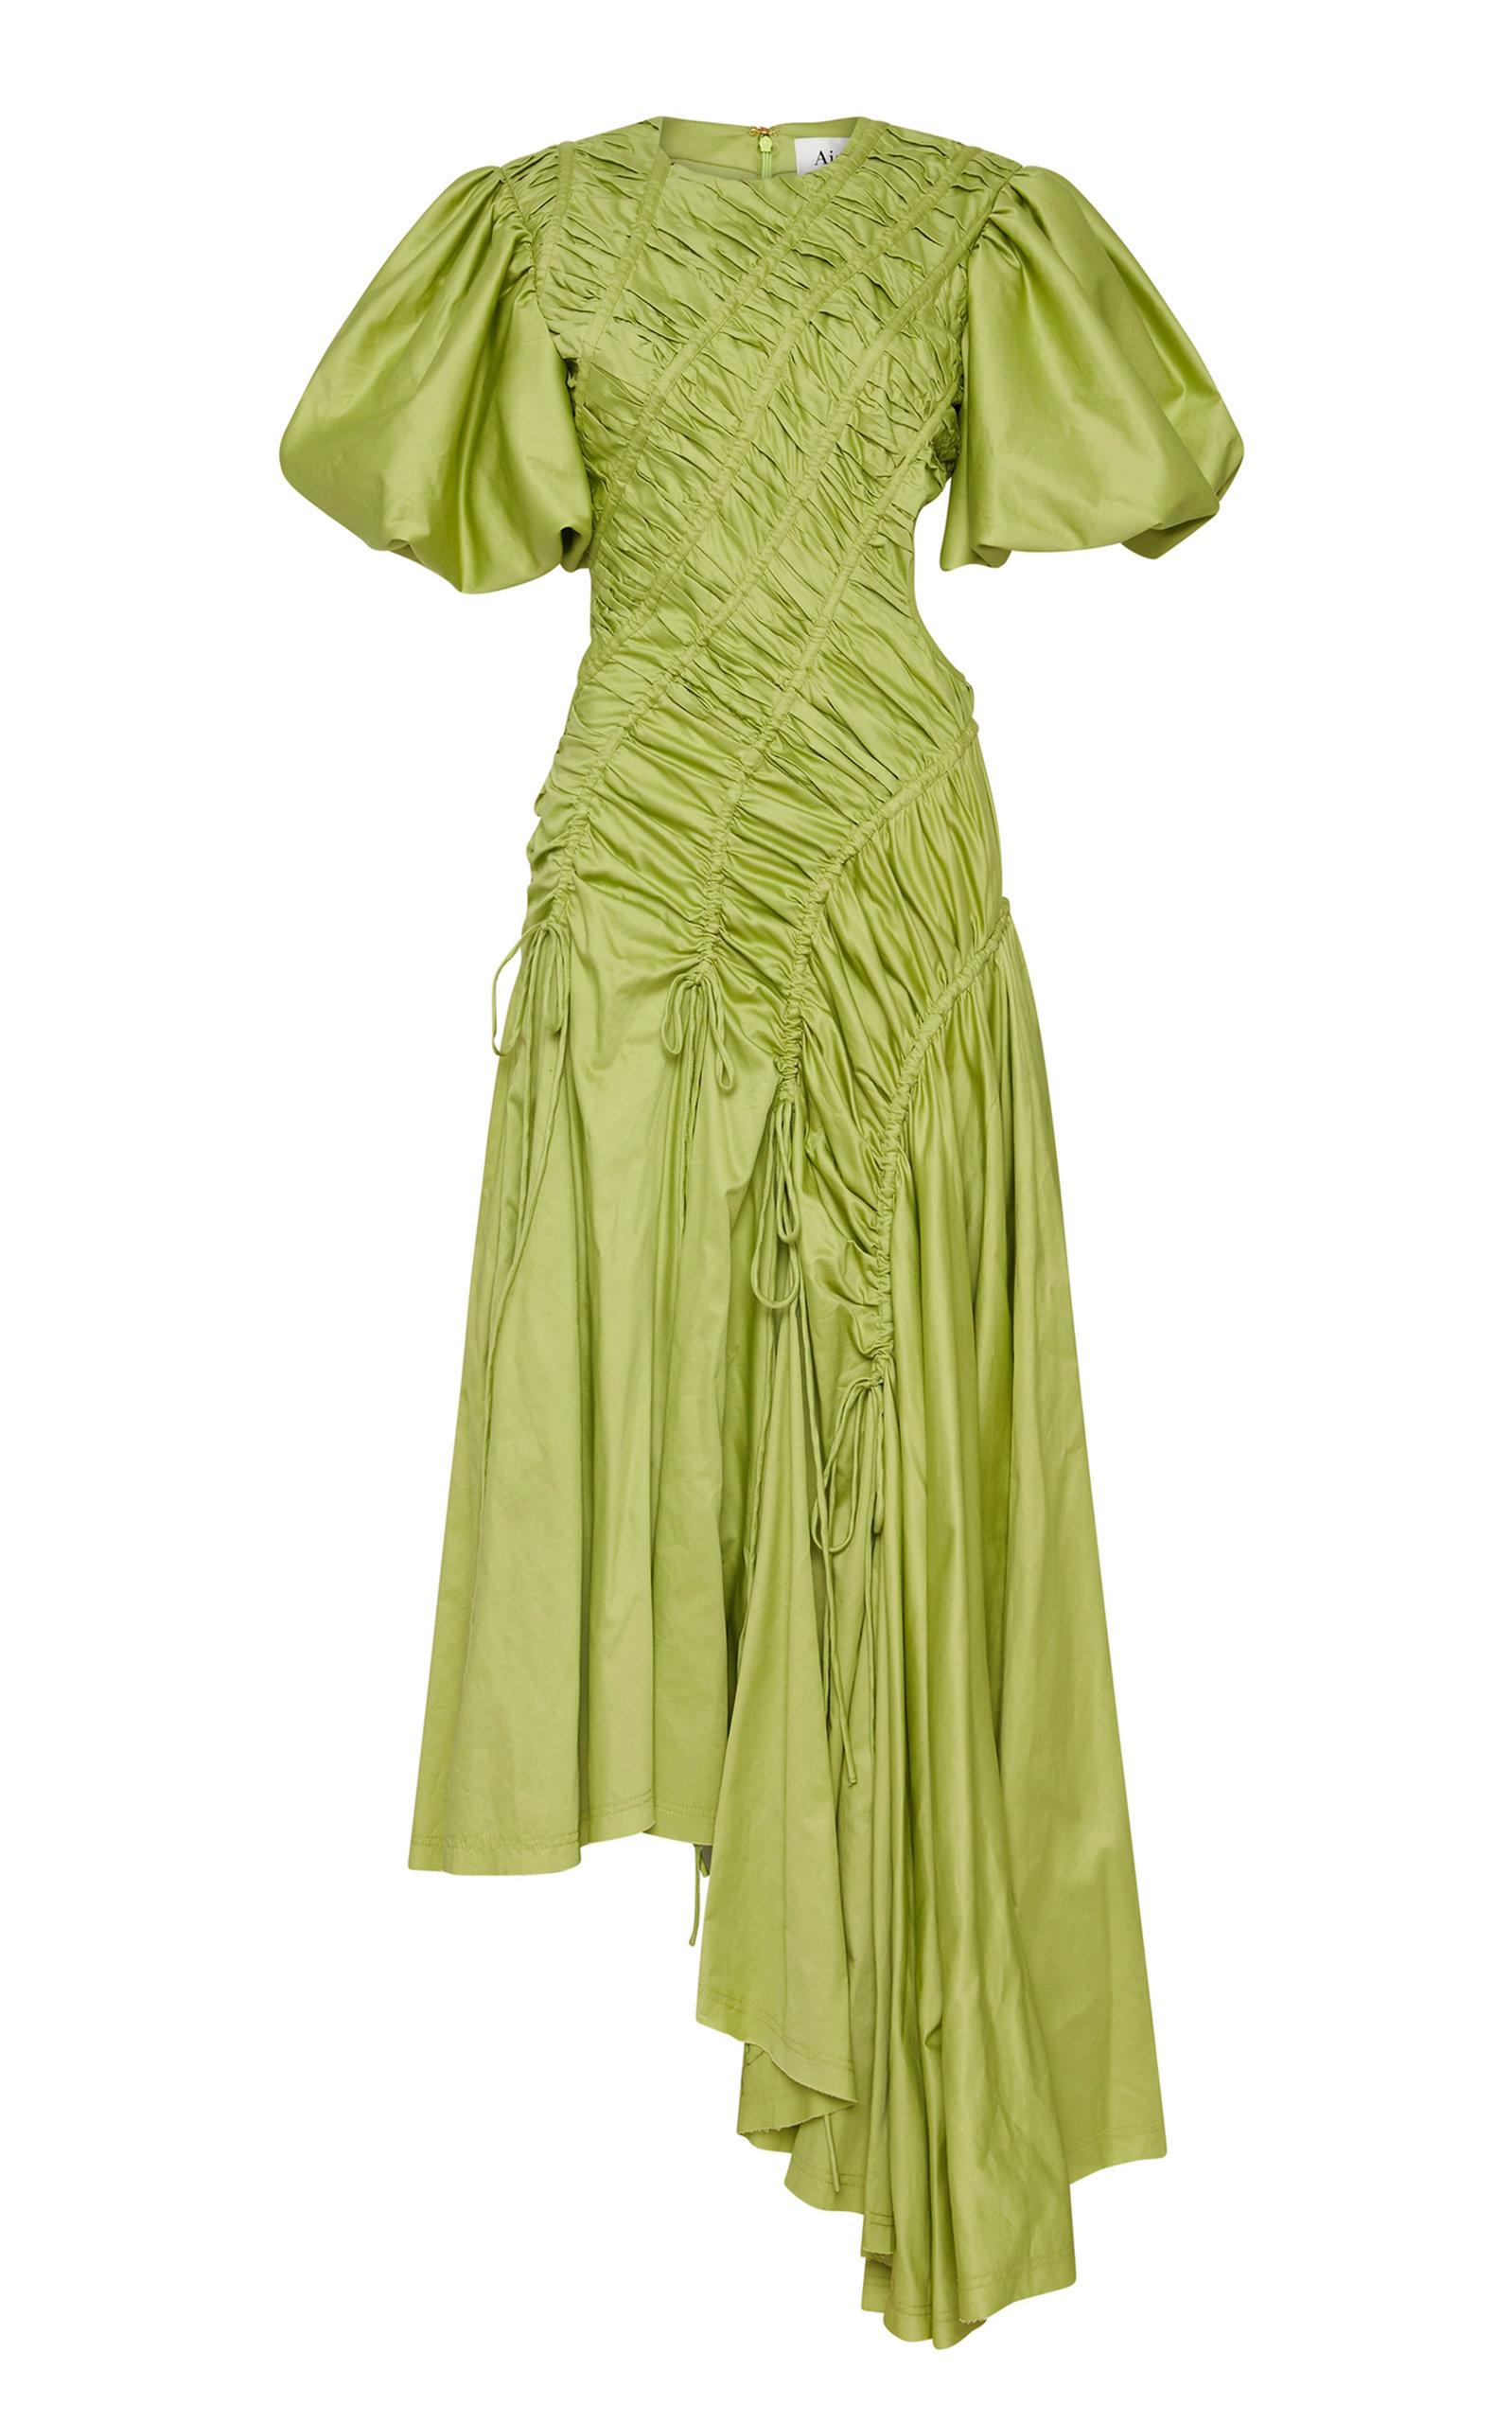 Aje. Siren Drawstring Cut-out Dress in Green | Lyst